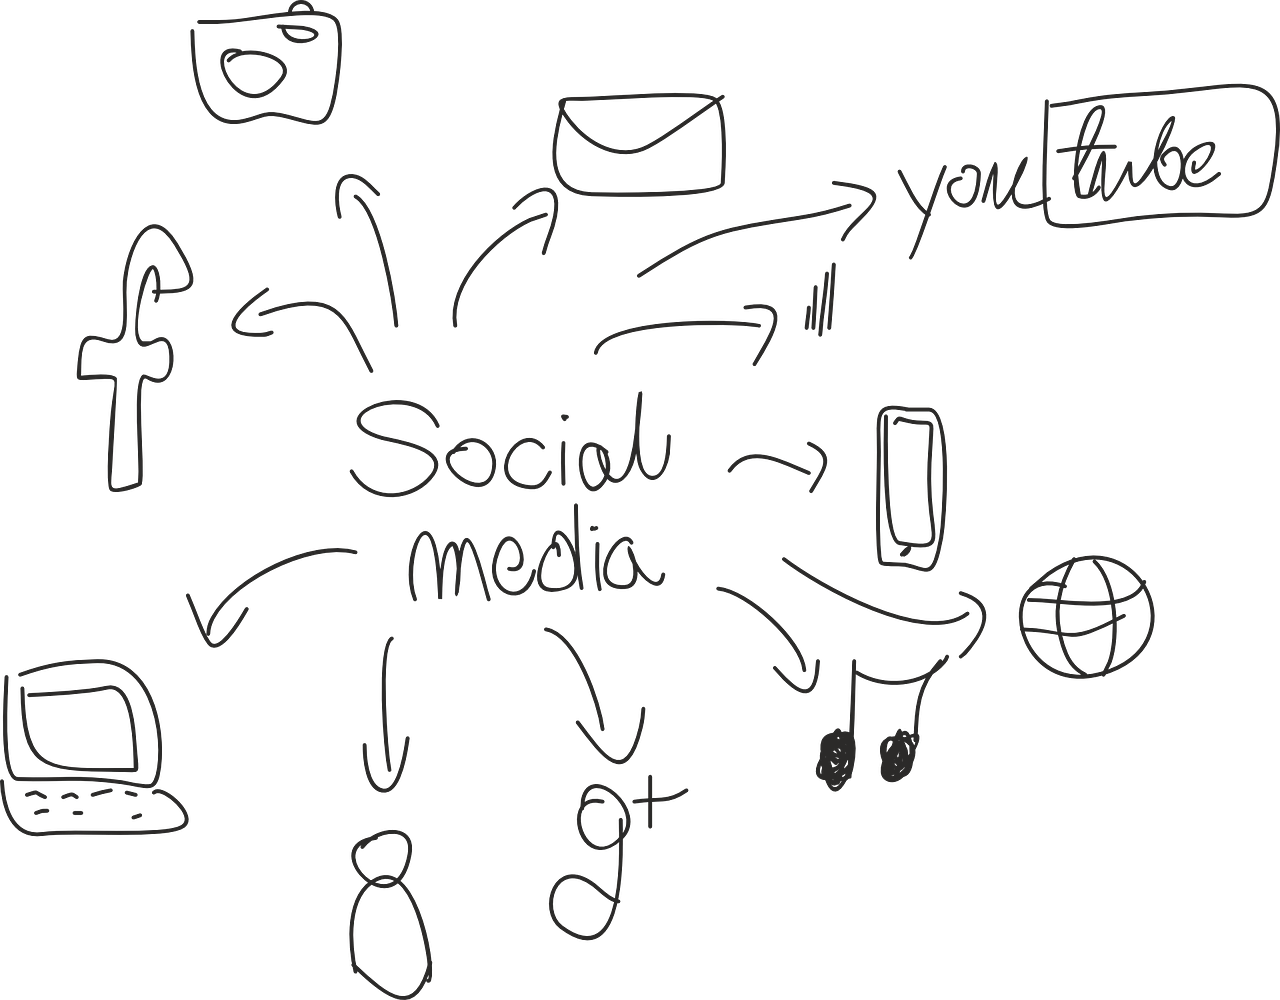 Social Media Marketing – kompletny przewodnik